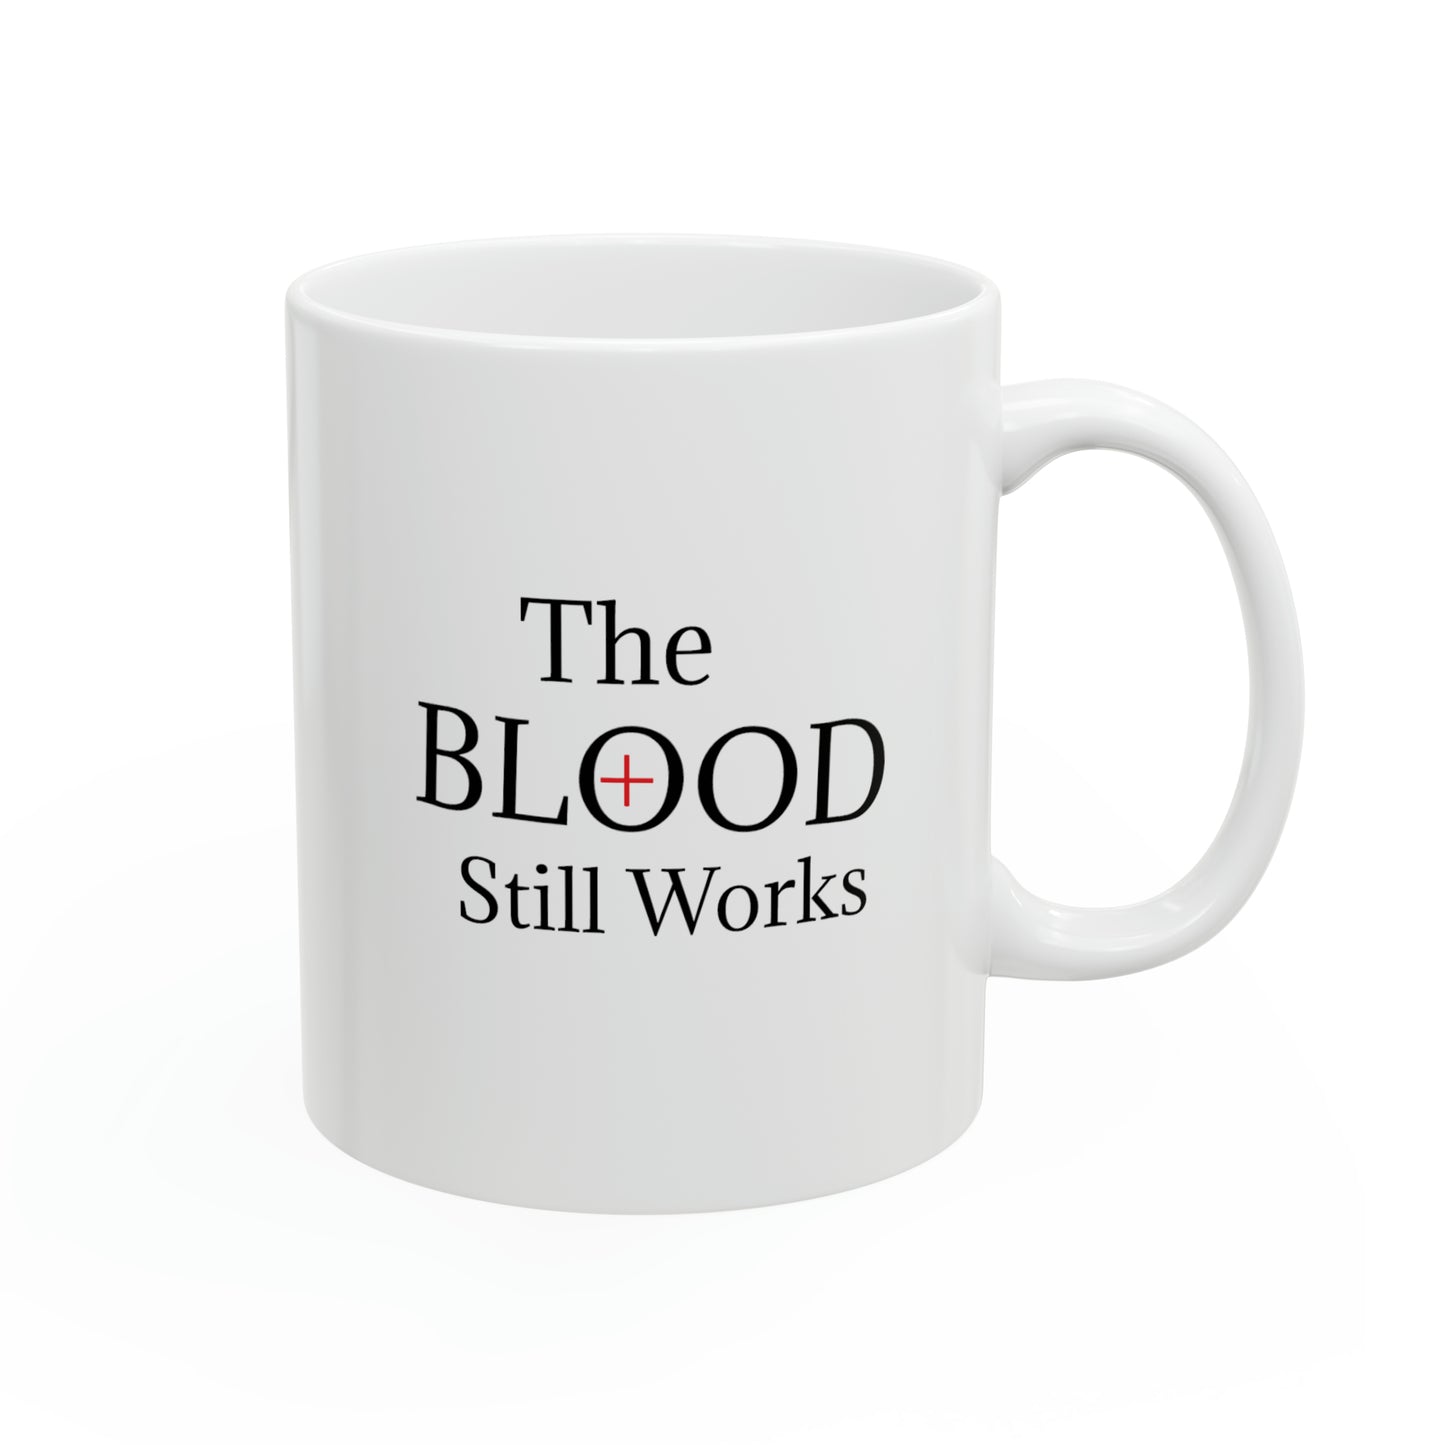 The Blood Still Works Mug Christian Mug Ceramic Mugs, Easter Mug Jesus Mug 11oz